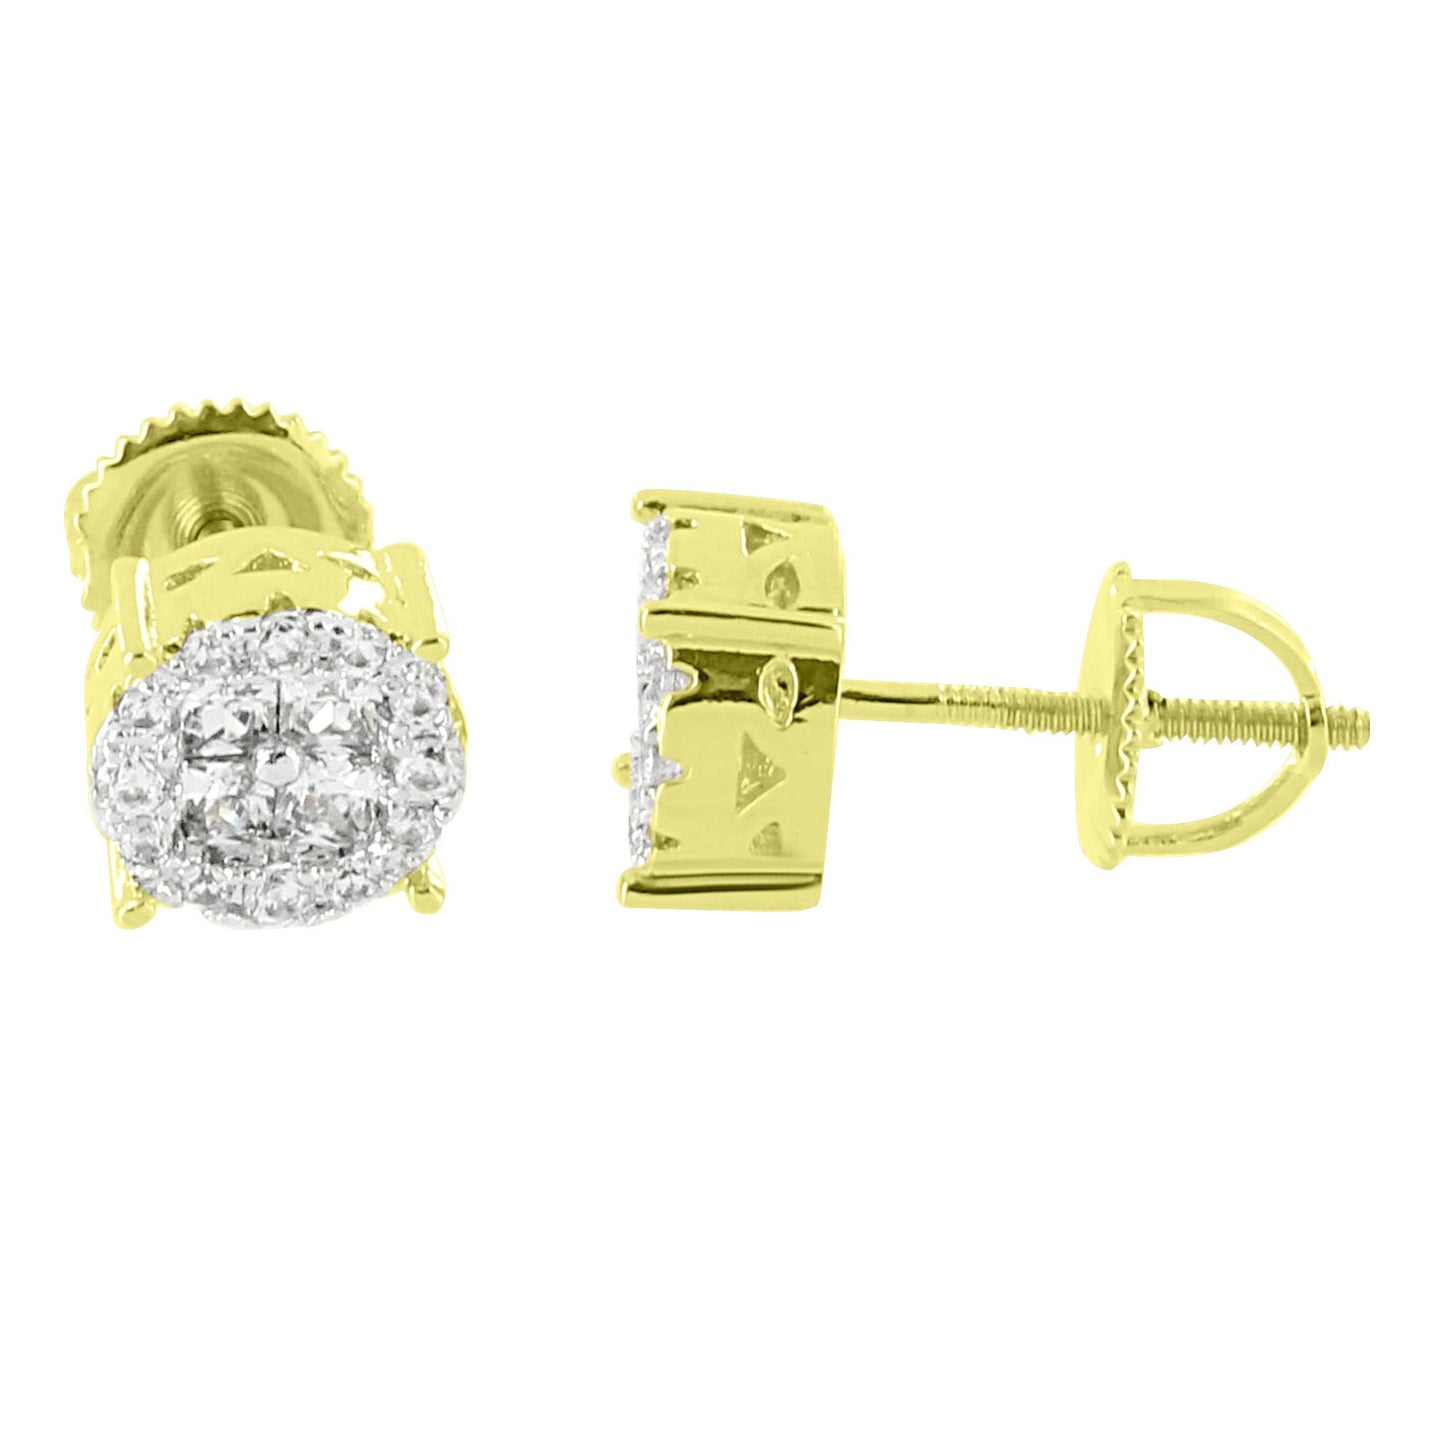 Cluster Set Round Earrings Lab Diamonds 14k Gold Finish Screw On 8mm Studs Bling